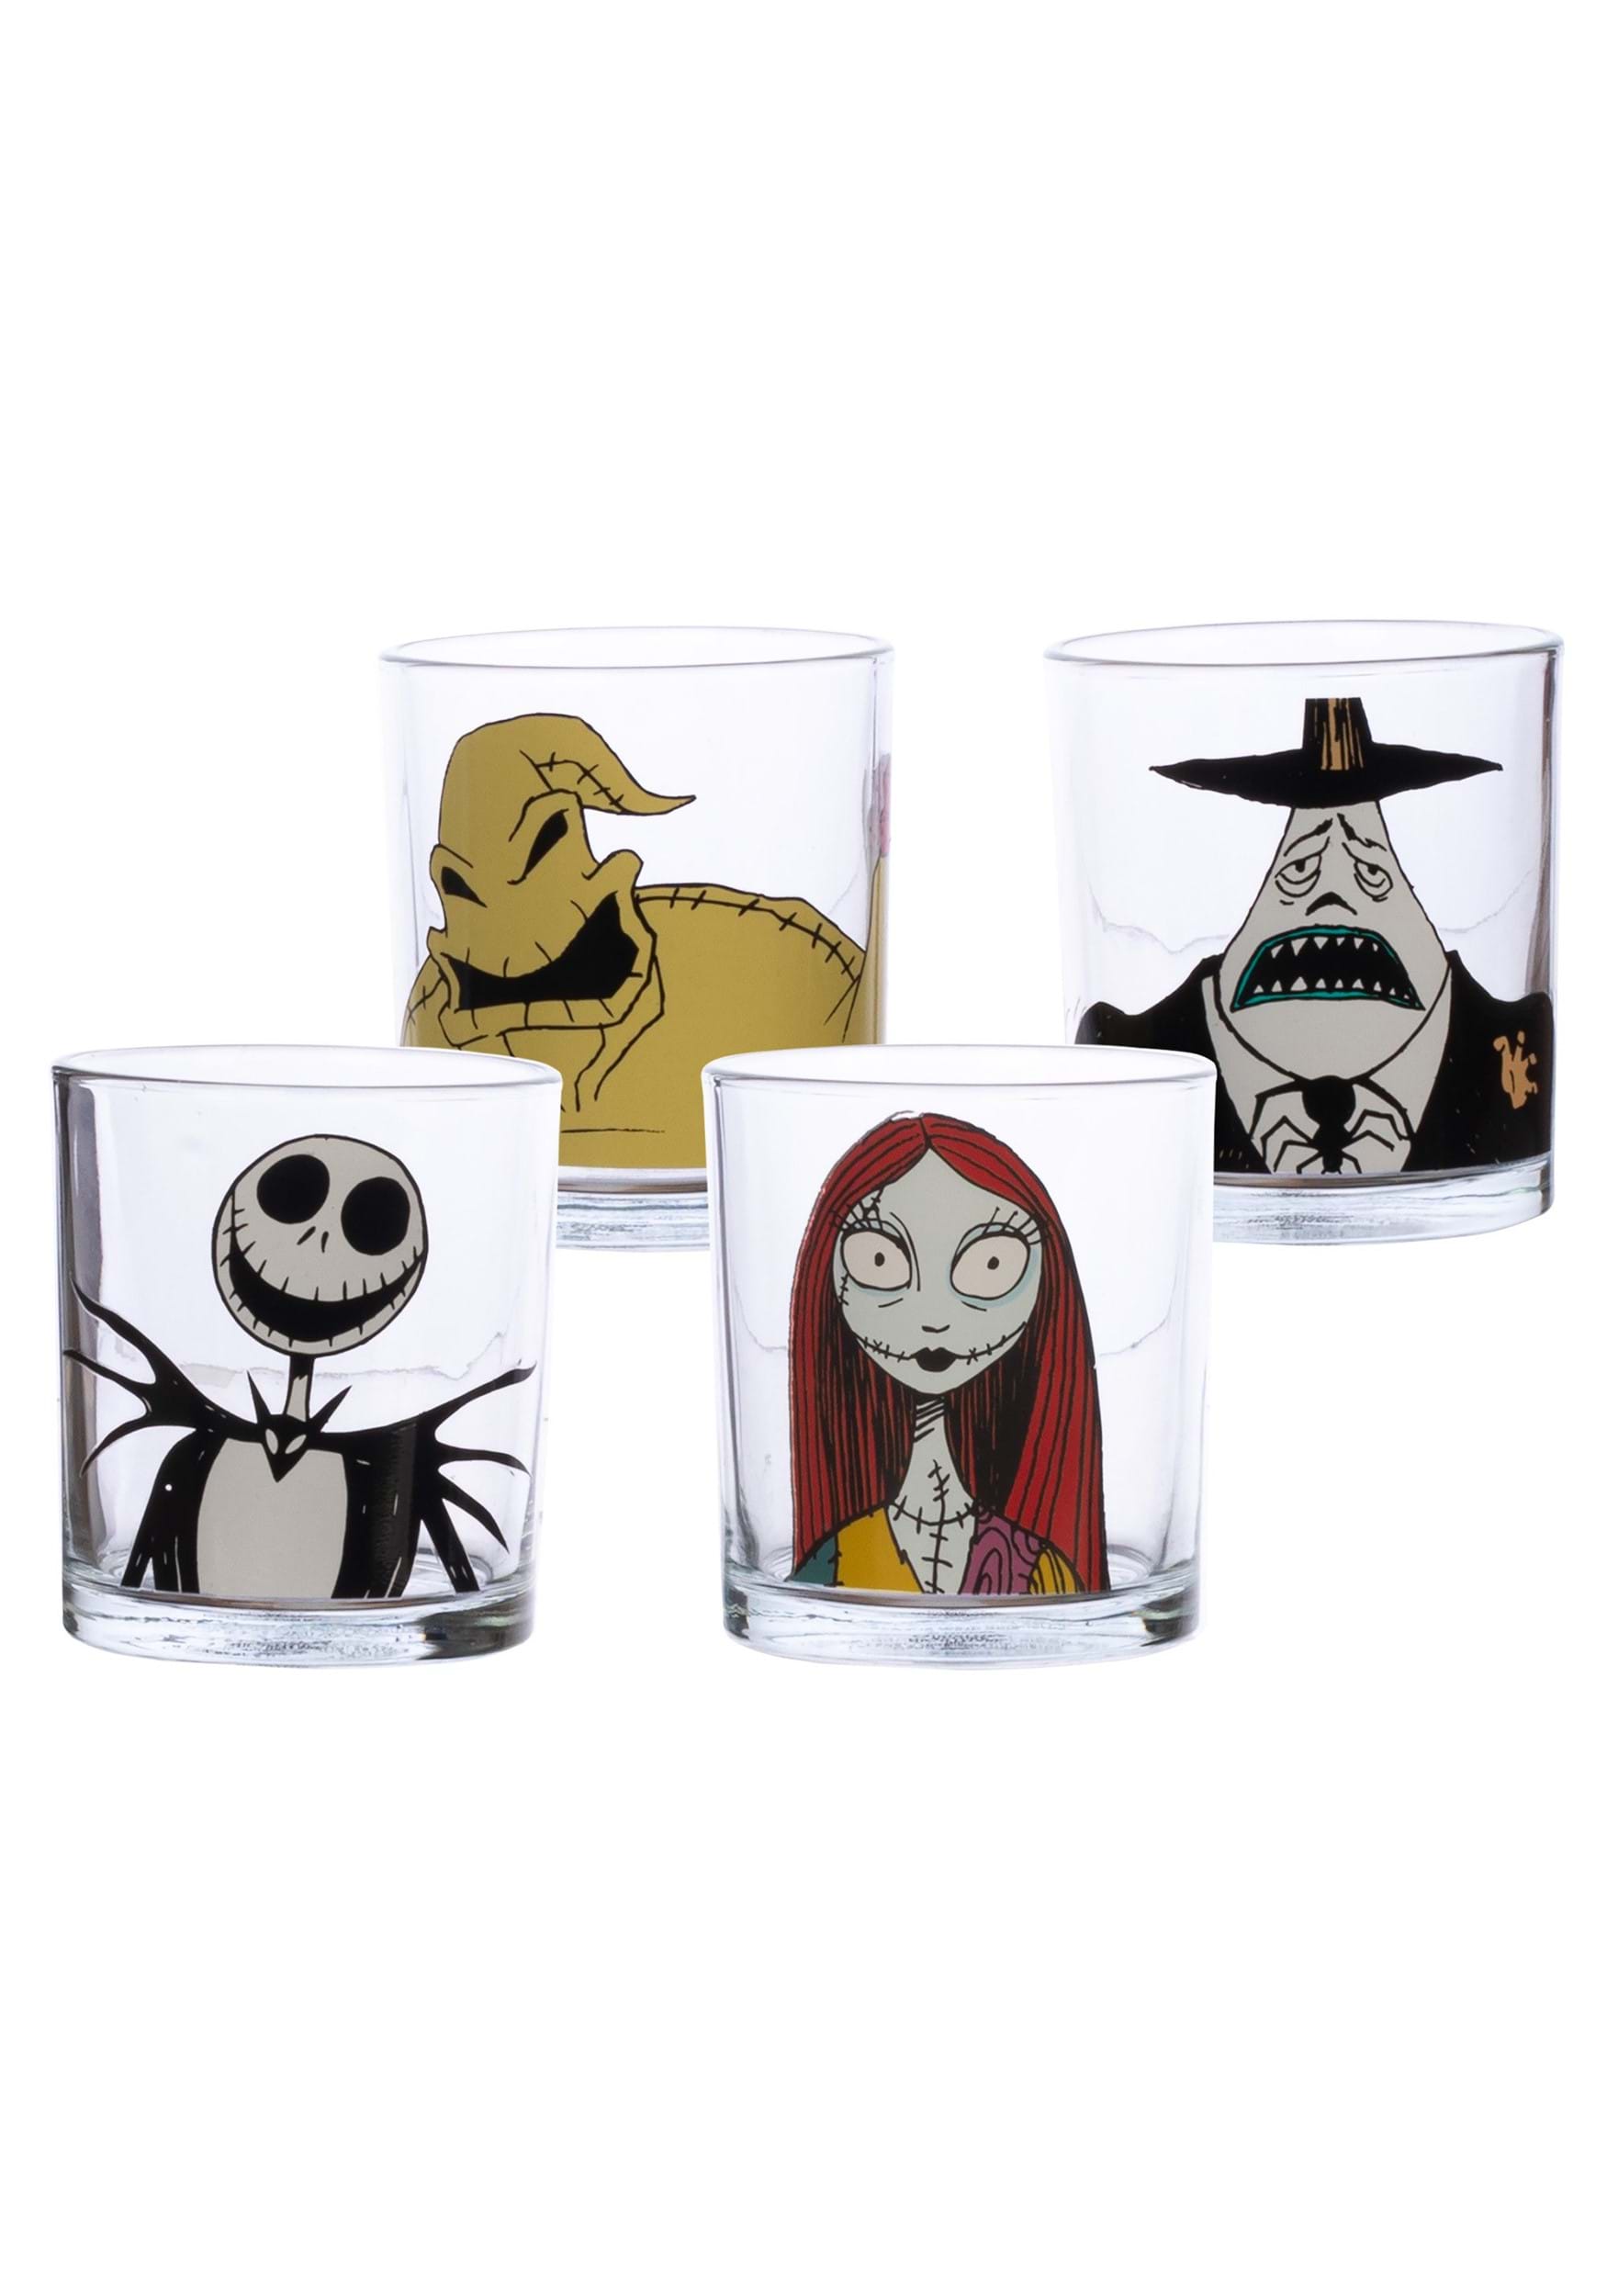 https://images.halloweencostumes.com/products/90048/1-1/disney-nightmare-before-christmas-10oz-glass-set.jpg